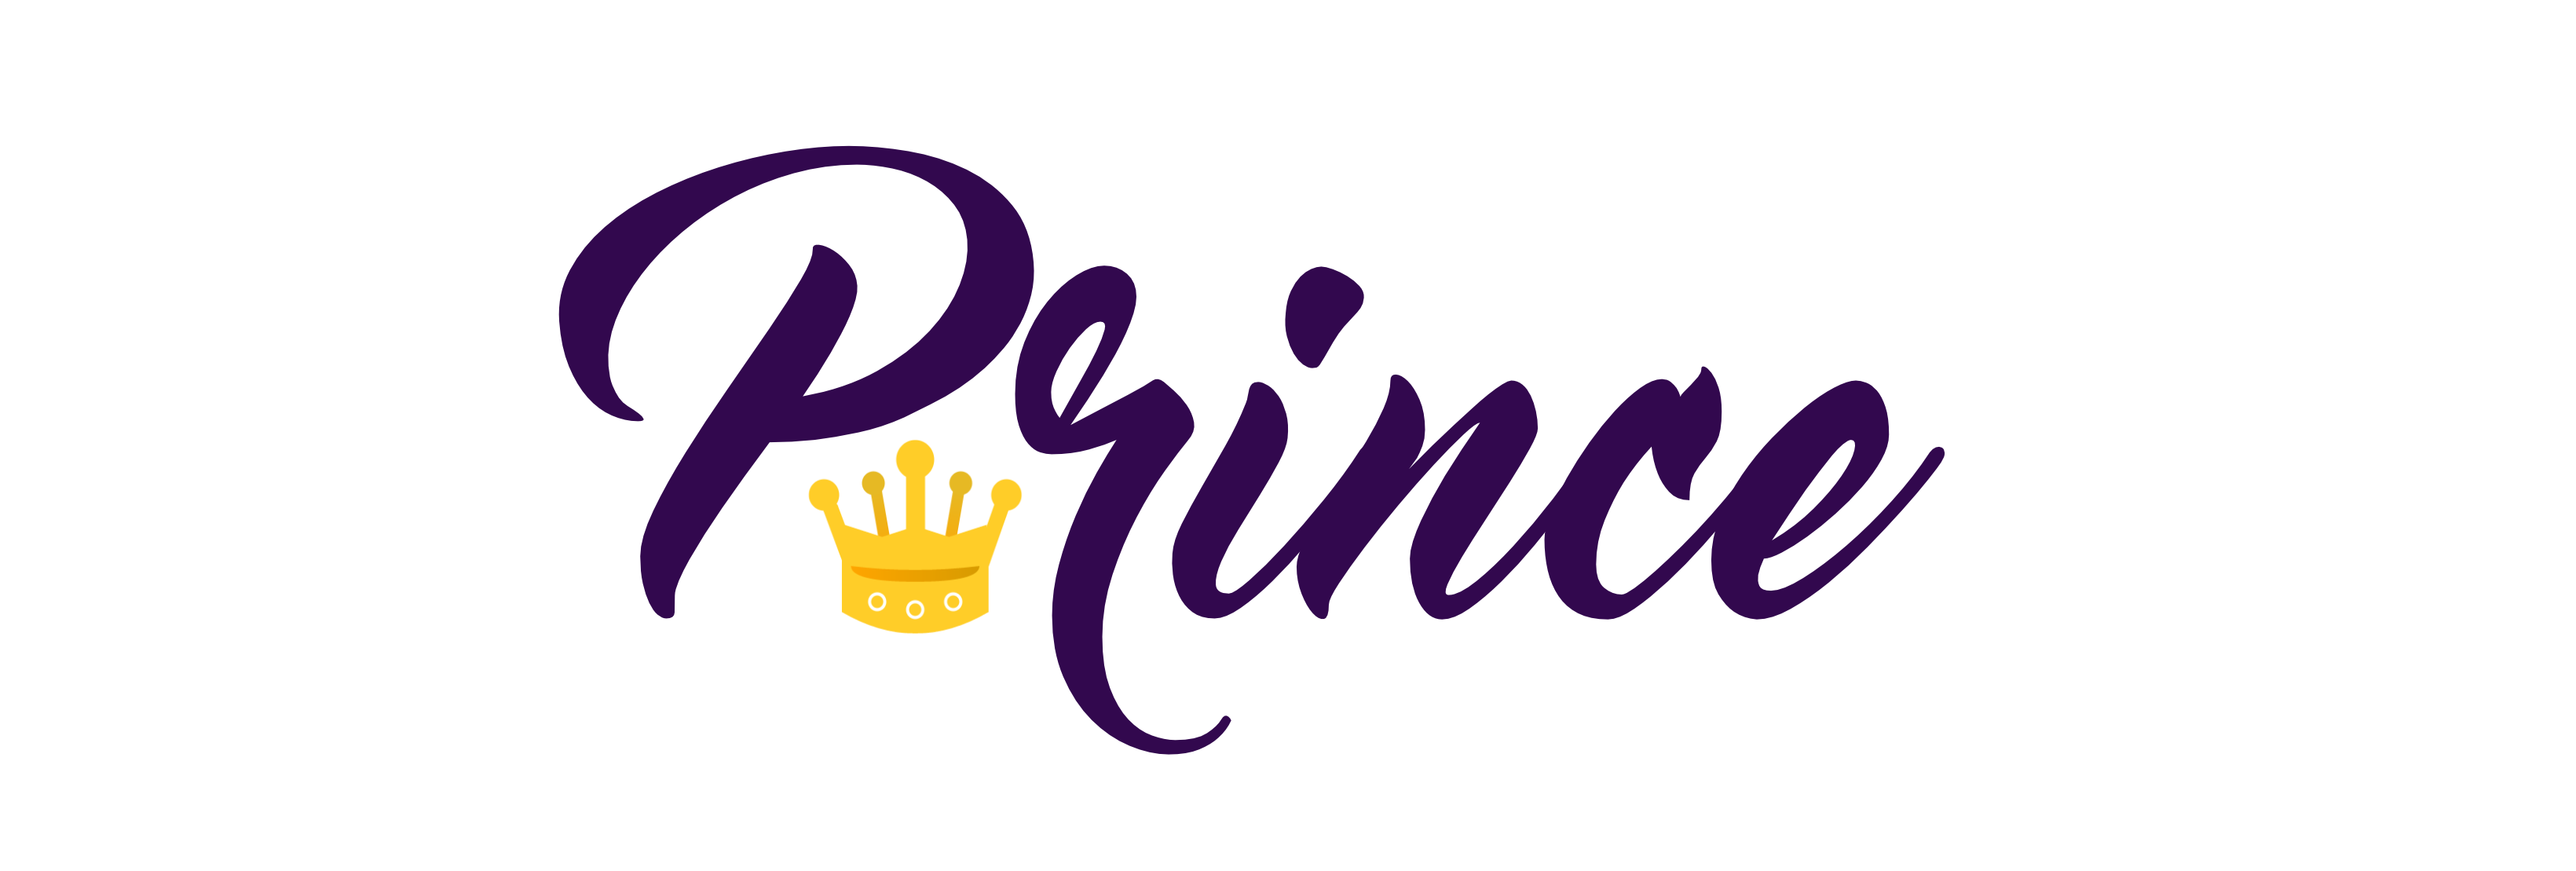 prince_logo